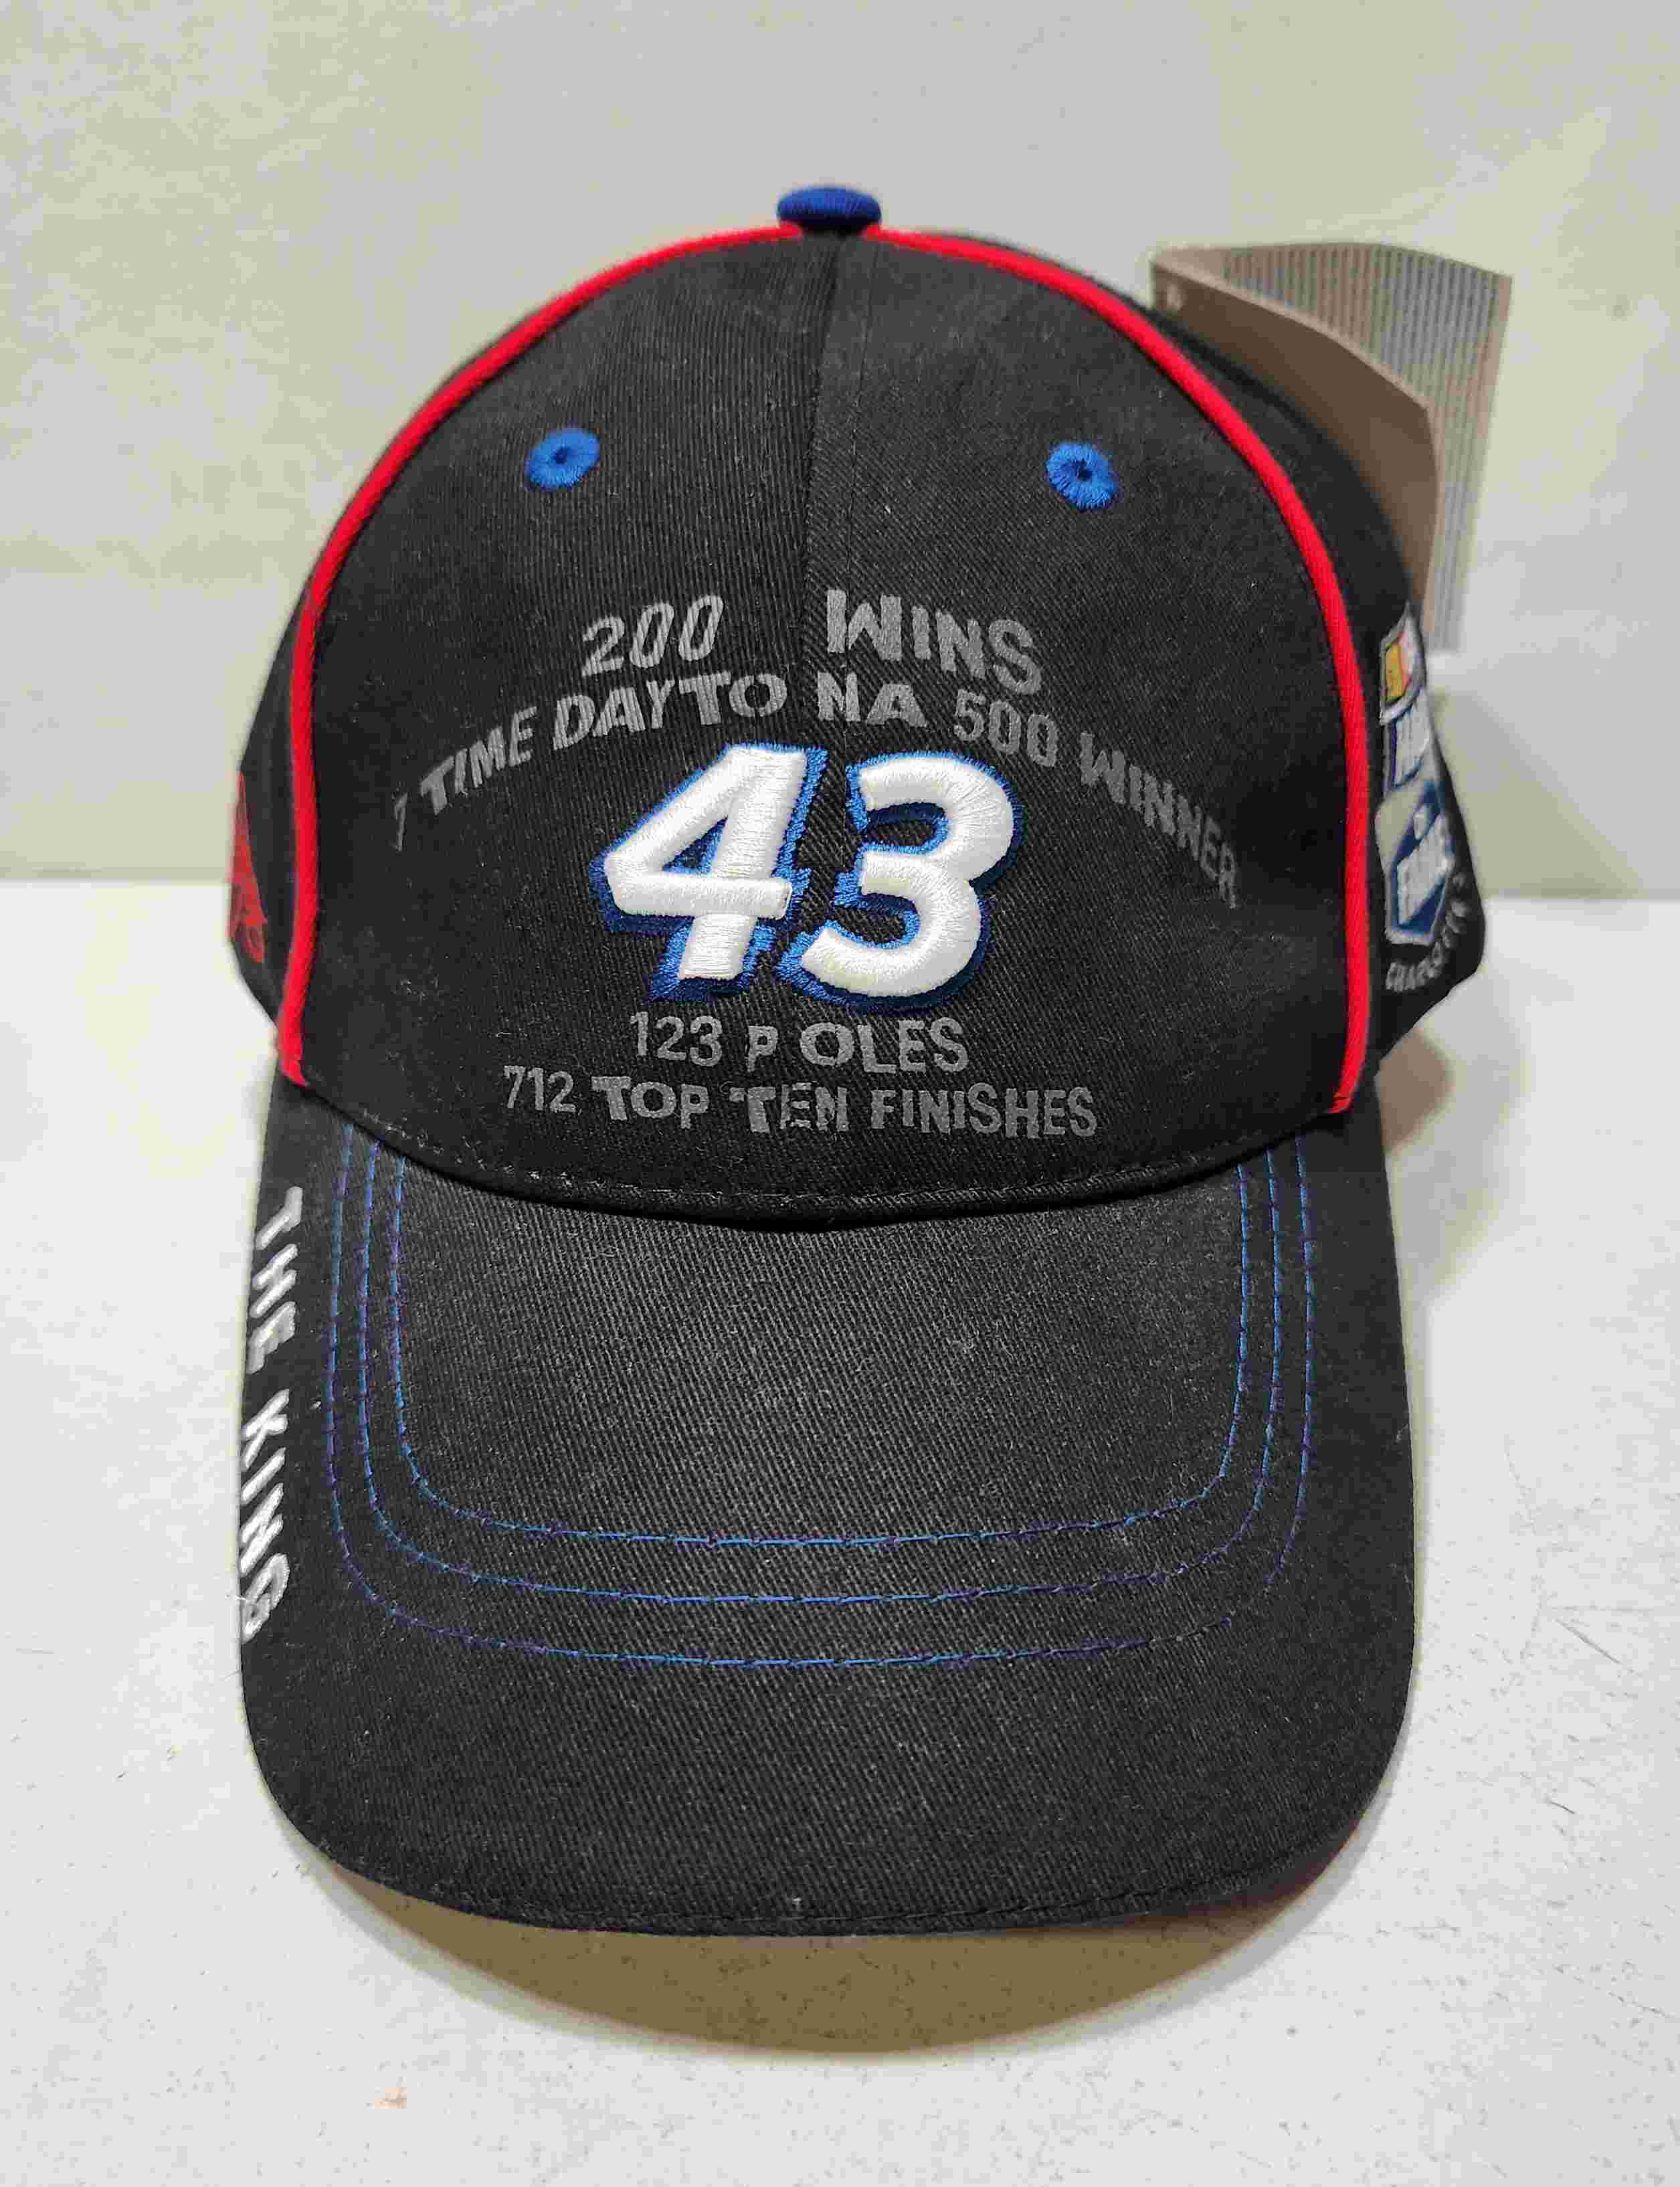 2010 Richard Petty "NASCAR Hall of Fame" cap